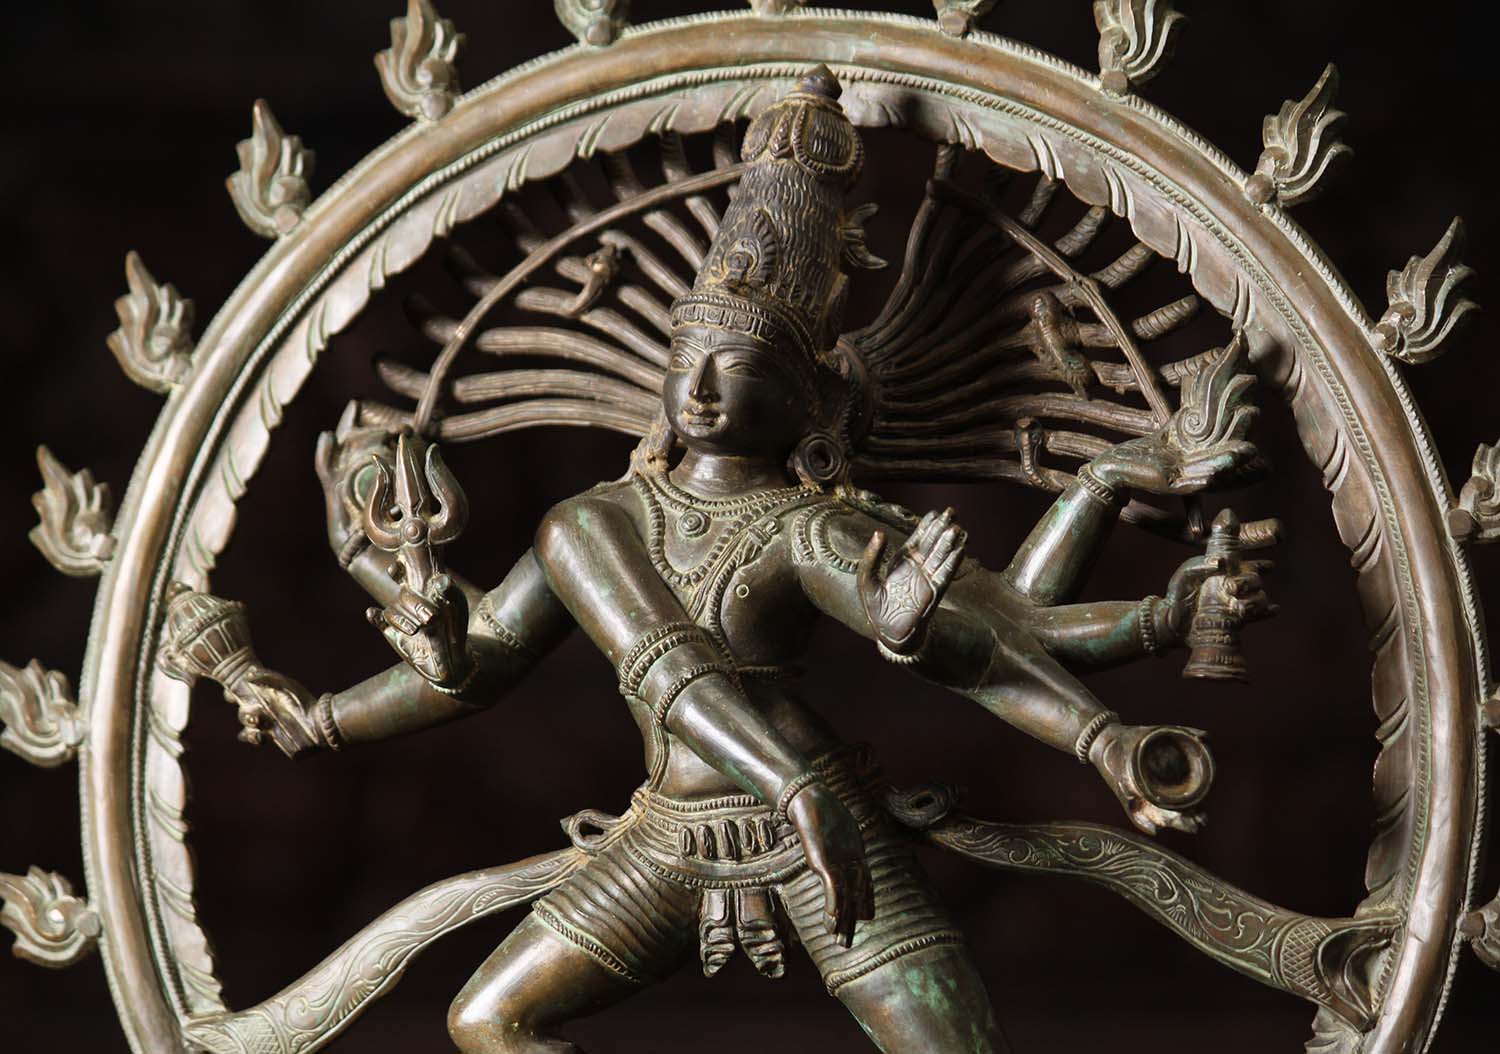 Brass Shiva as Lord Nataraja Dancing on Apasmara with 8 Forms of Shiva on  Base 23